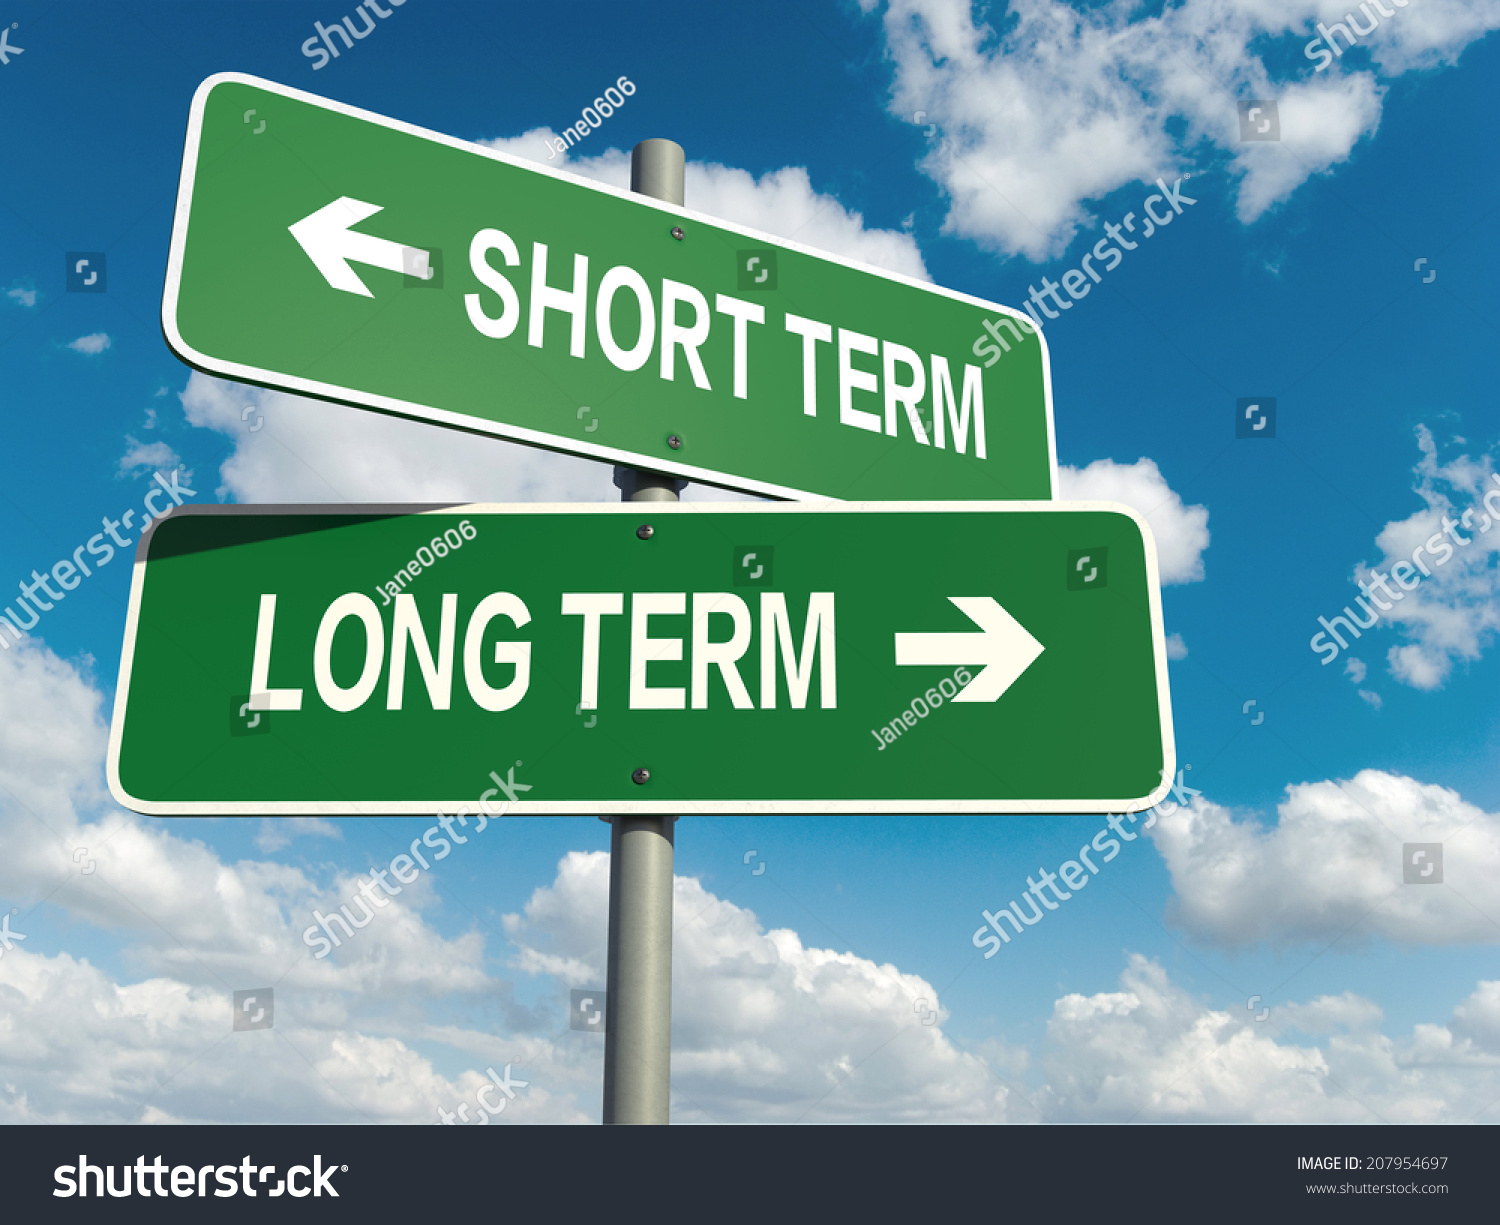 stock options short term or long term